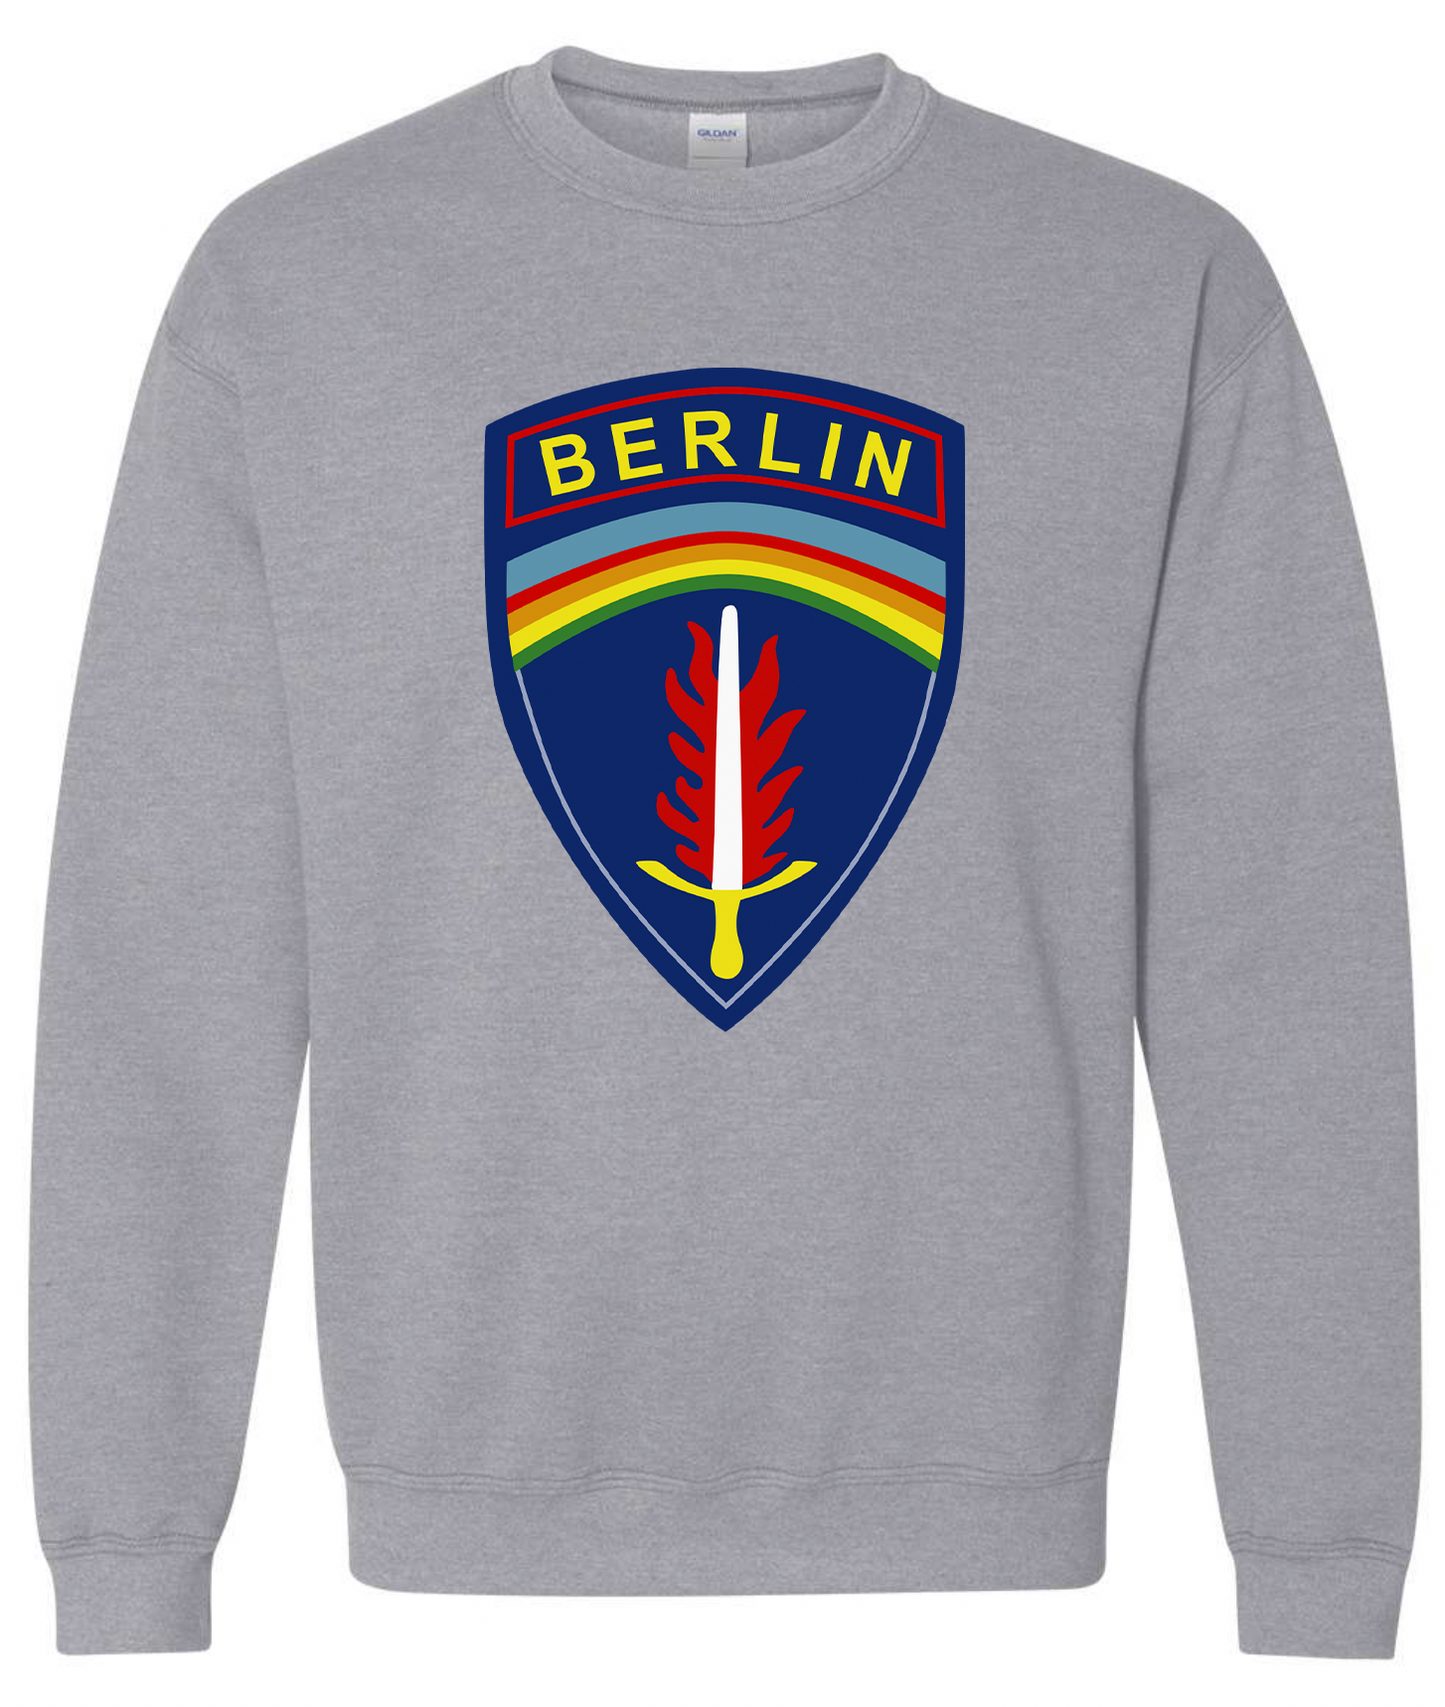 Berlin Brigade Tee and Sweatshirt